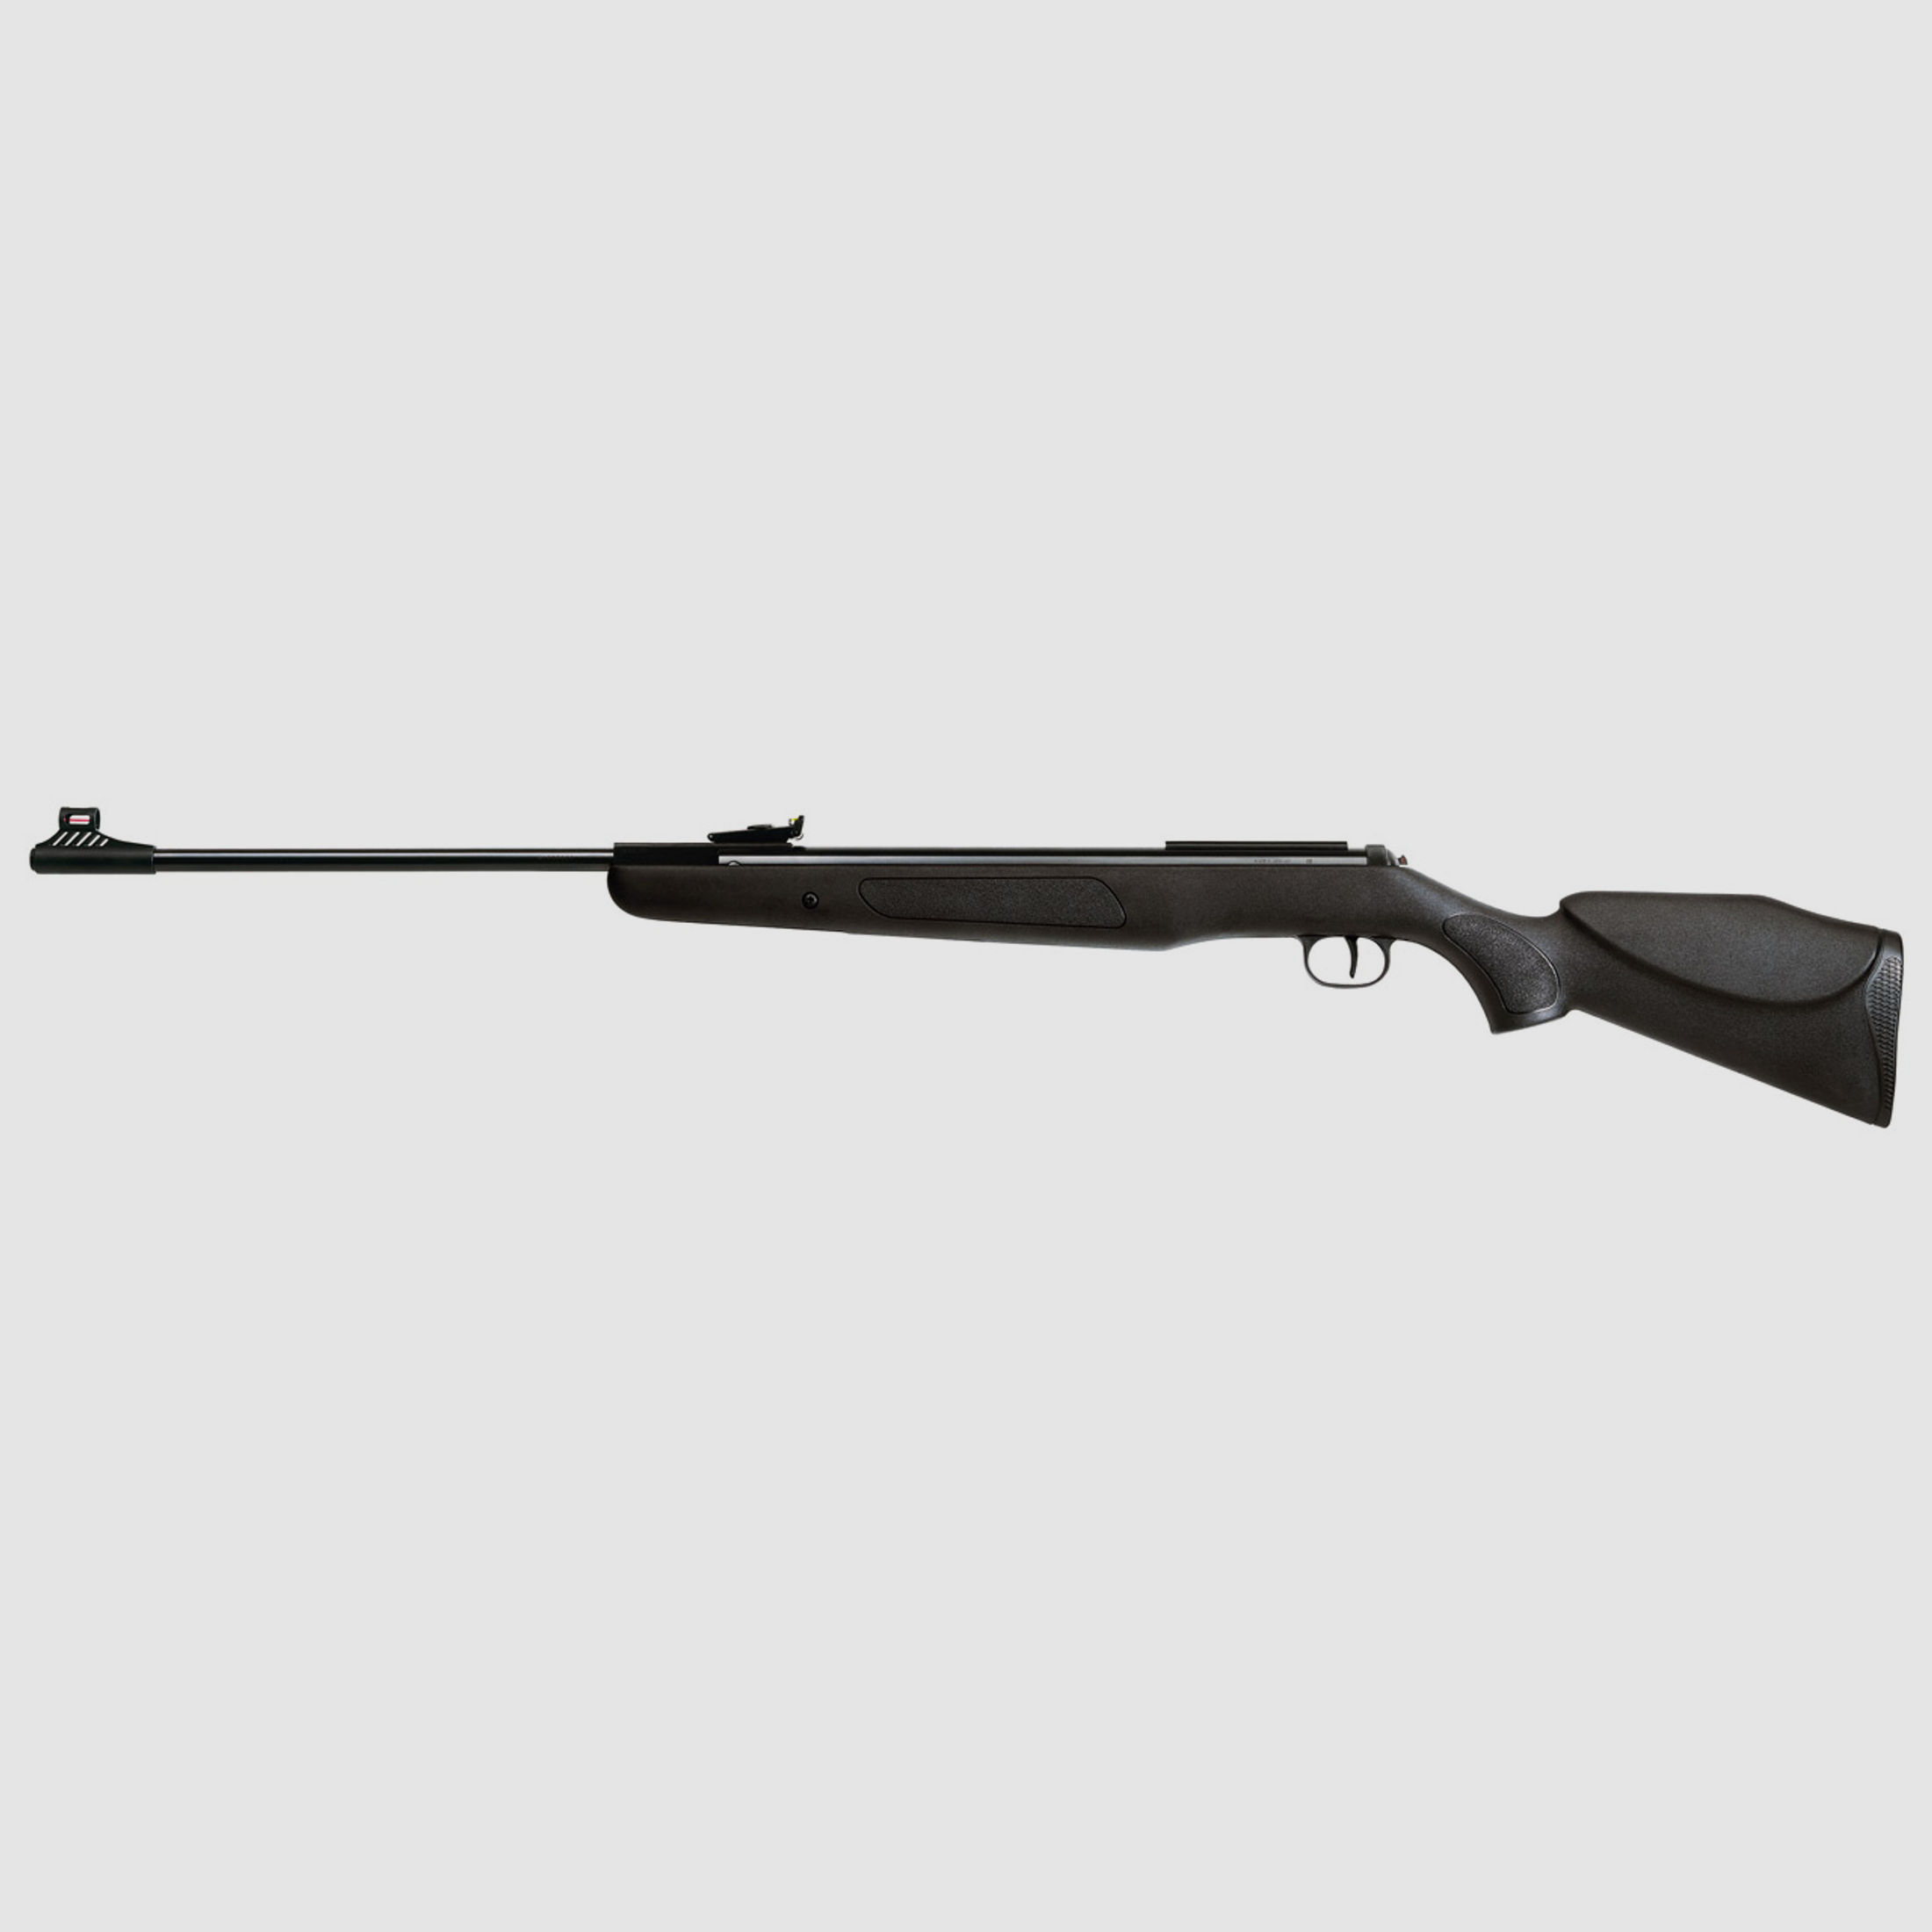 Knicklauf Luftgewehr Diana Panther 350 Magnum Kunststoffschaft schwarz Kaliber 4,5 mm (P18)